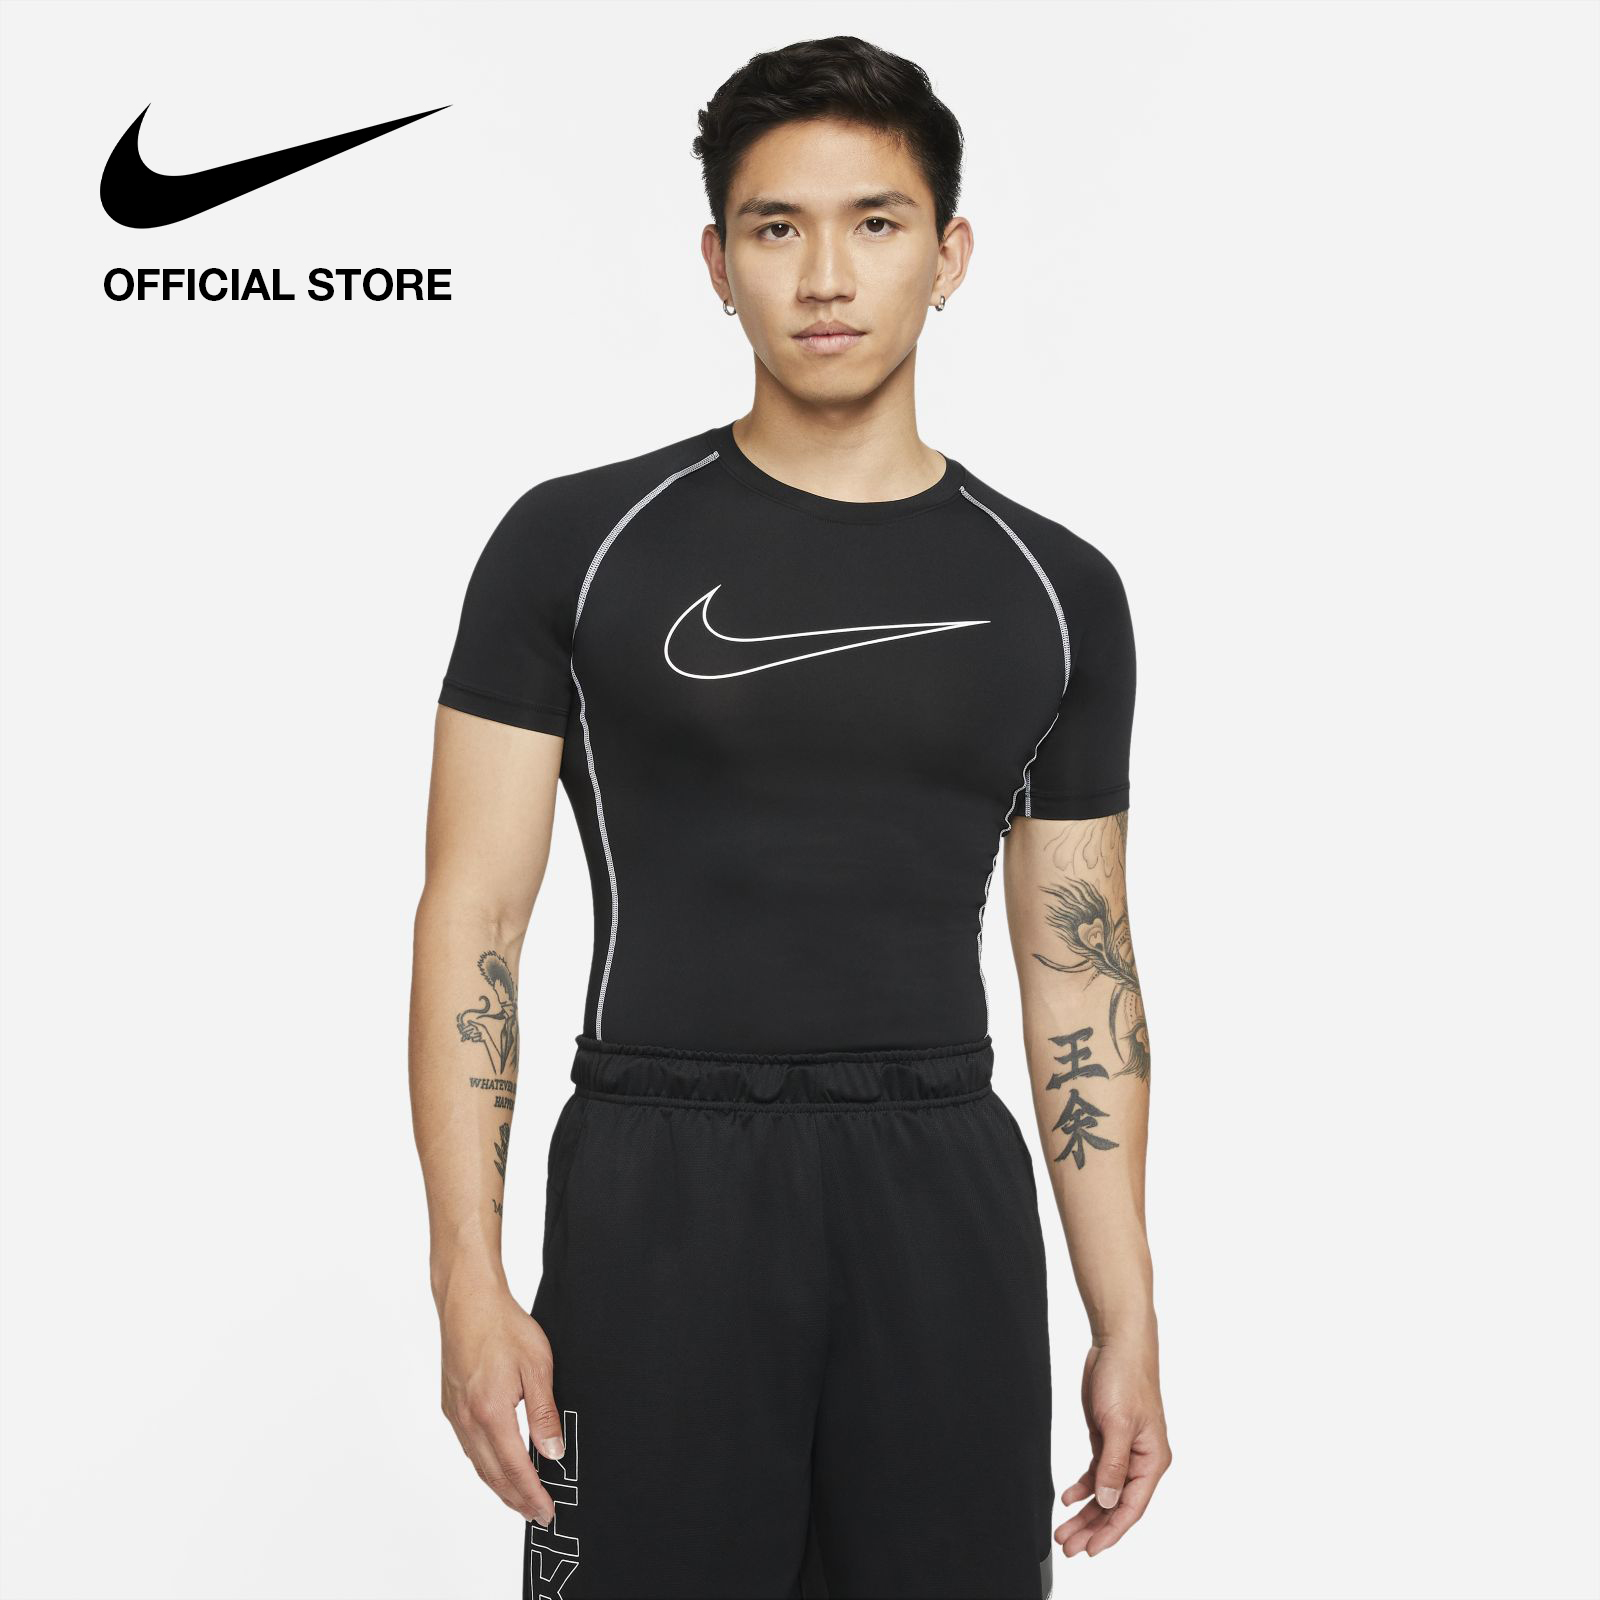 Nike Men's Pro Dri-FIT Tight Fit Short-Sleeve Top - Black เสื้อแขนสั้นผู้ชายทรงรัดรูป Nike Pro Dri-FIT - สีดำ